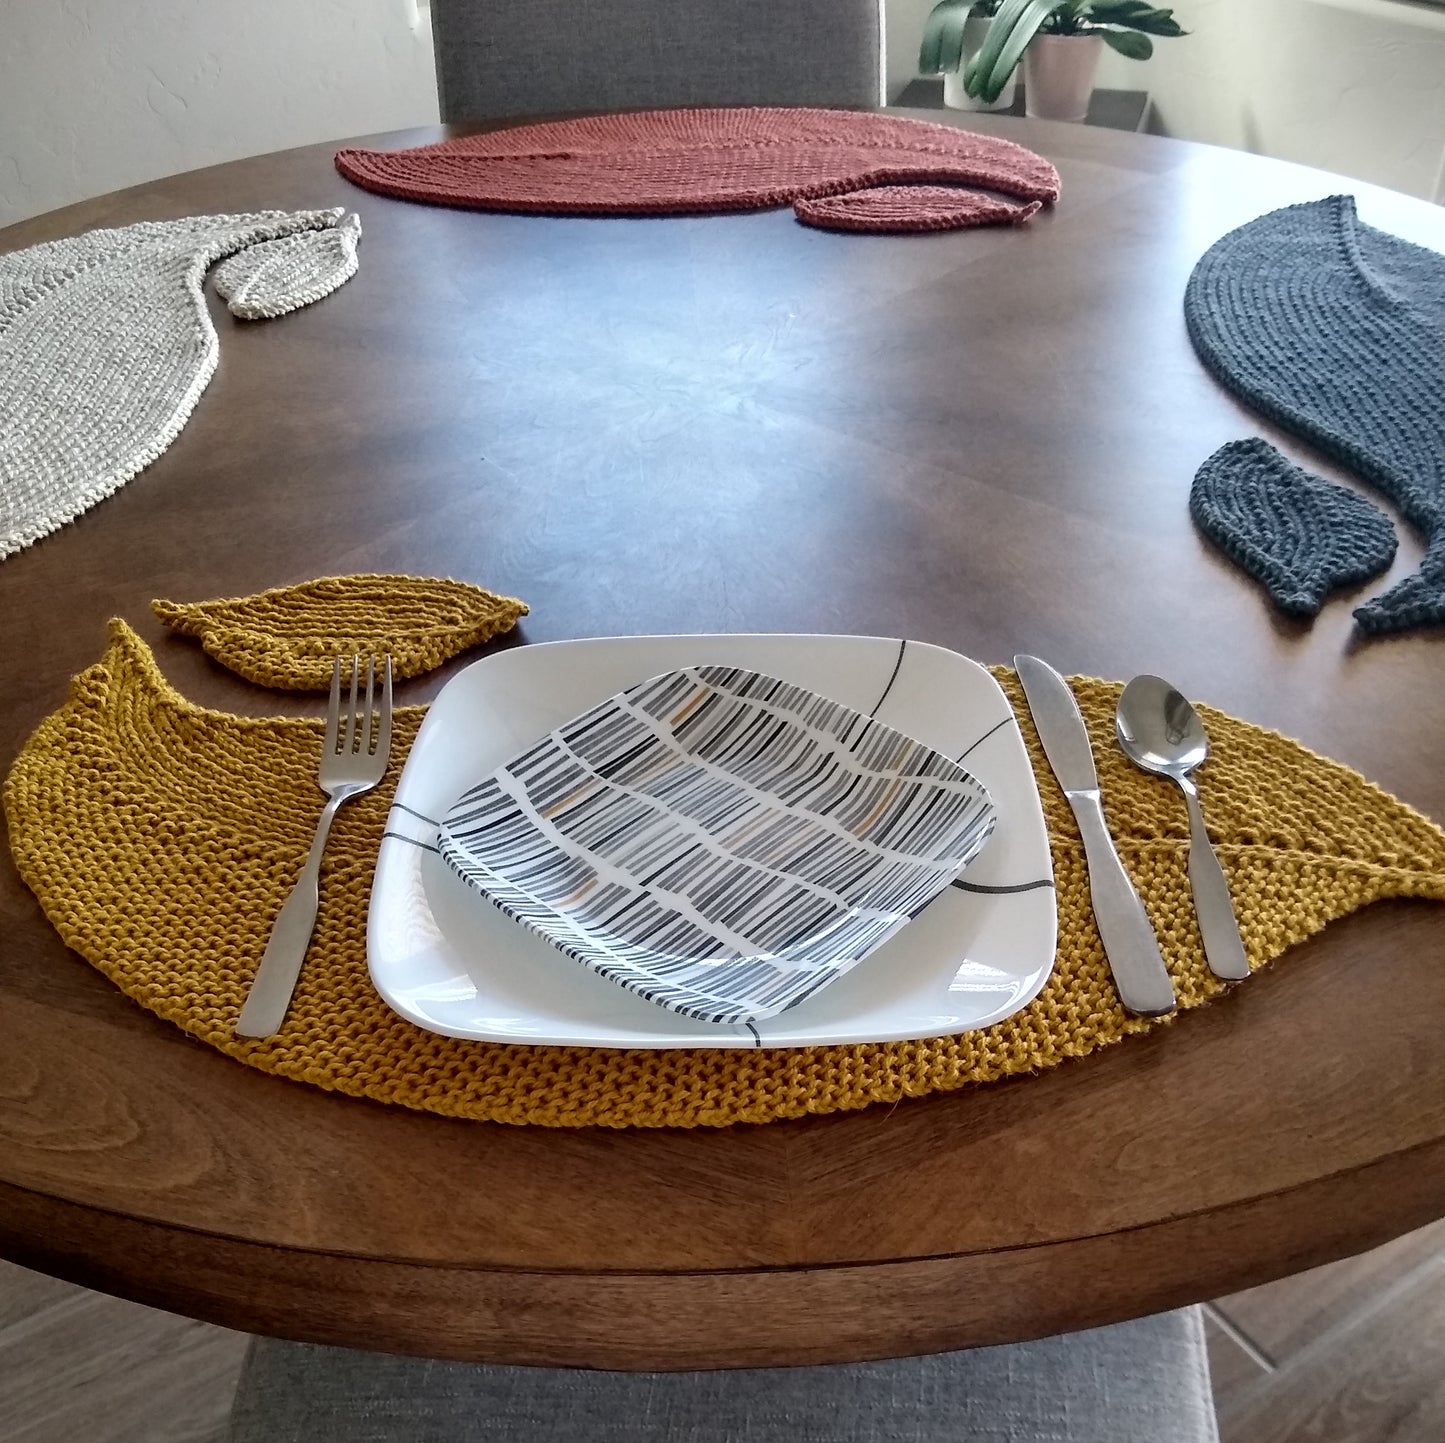 Leaf Placemat and Mug Mat Knitting Pattern